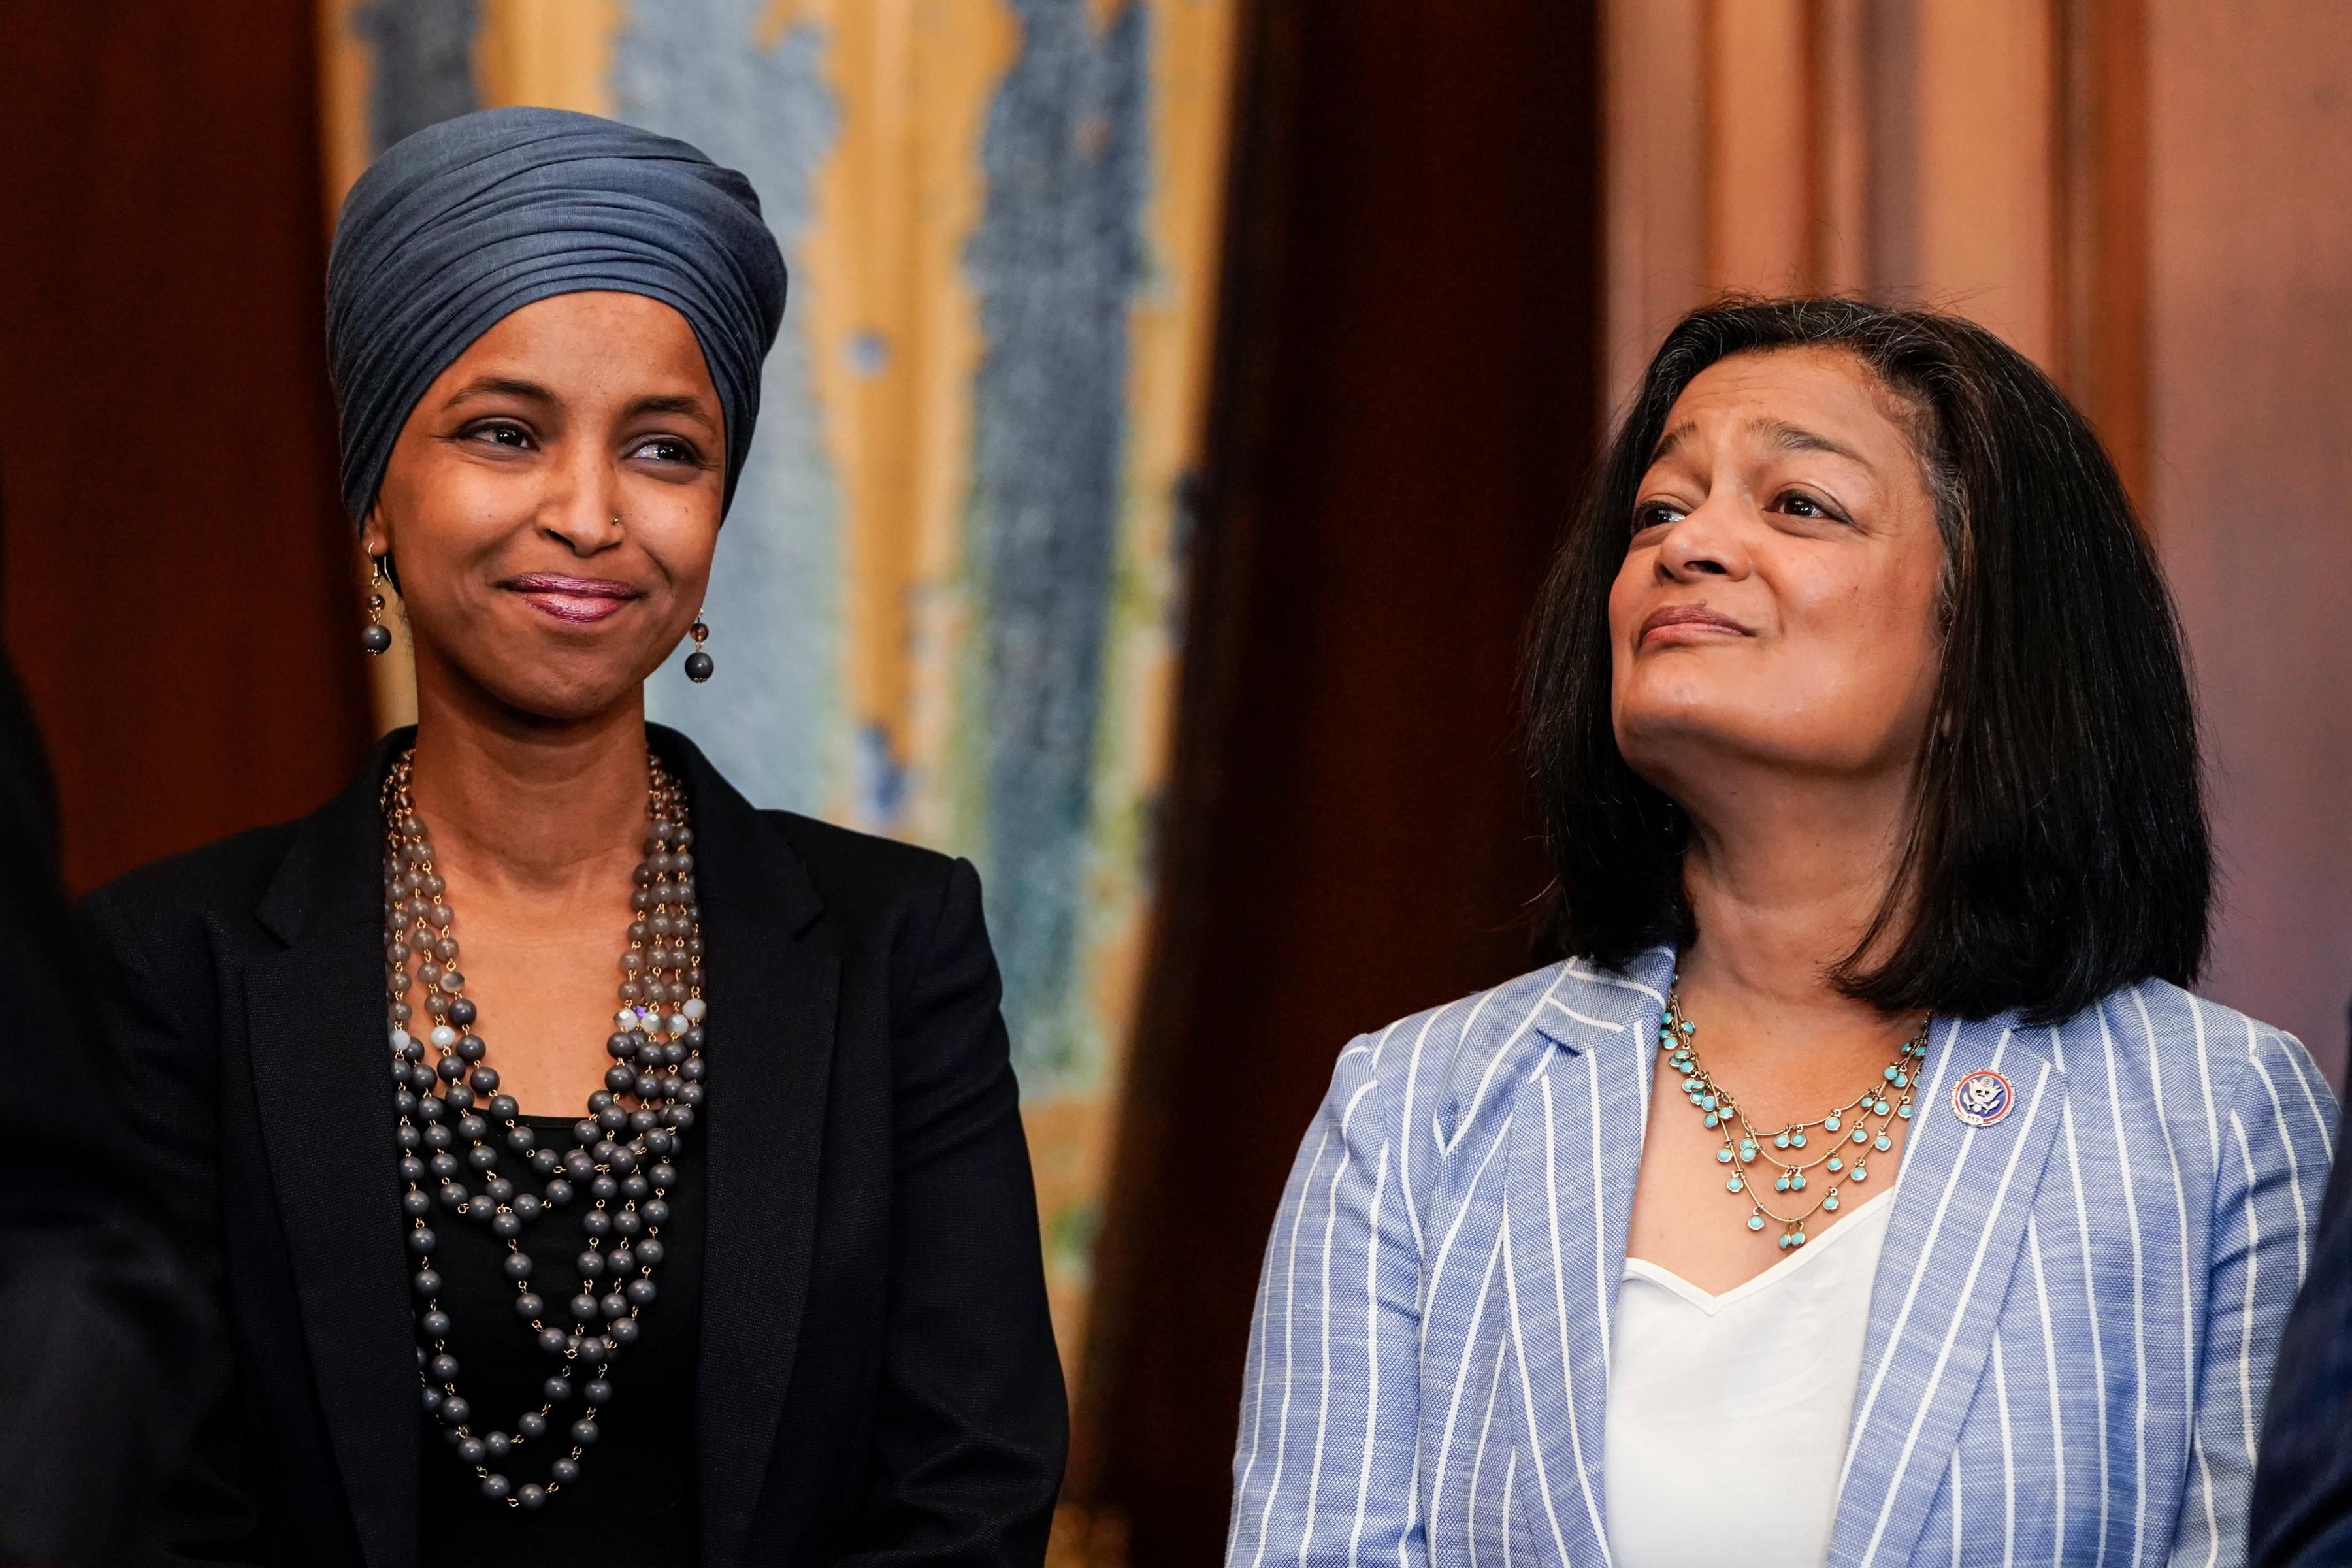 Reps. Ilhan Omar and Pramila Jayapal attend an event in Washington, D.C.